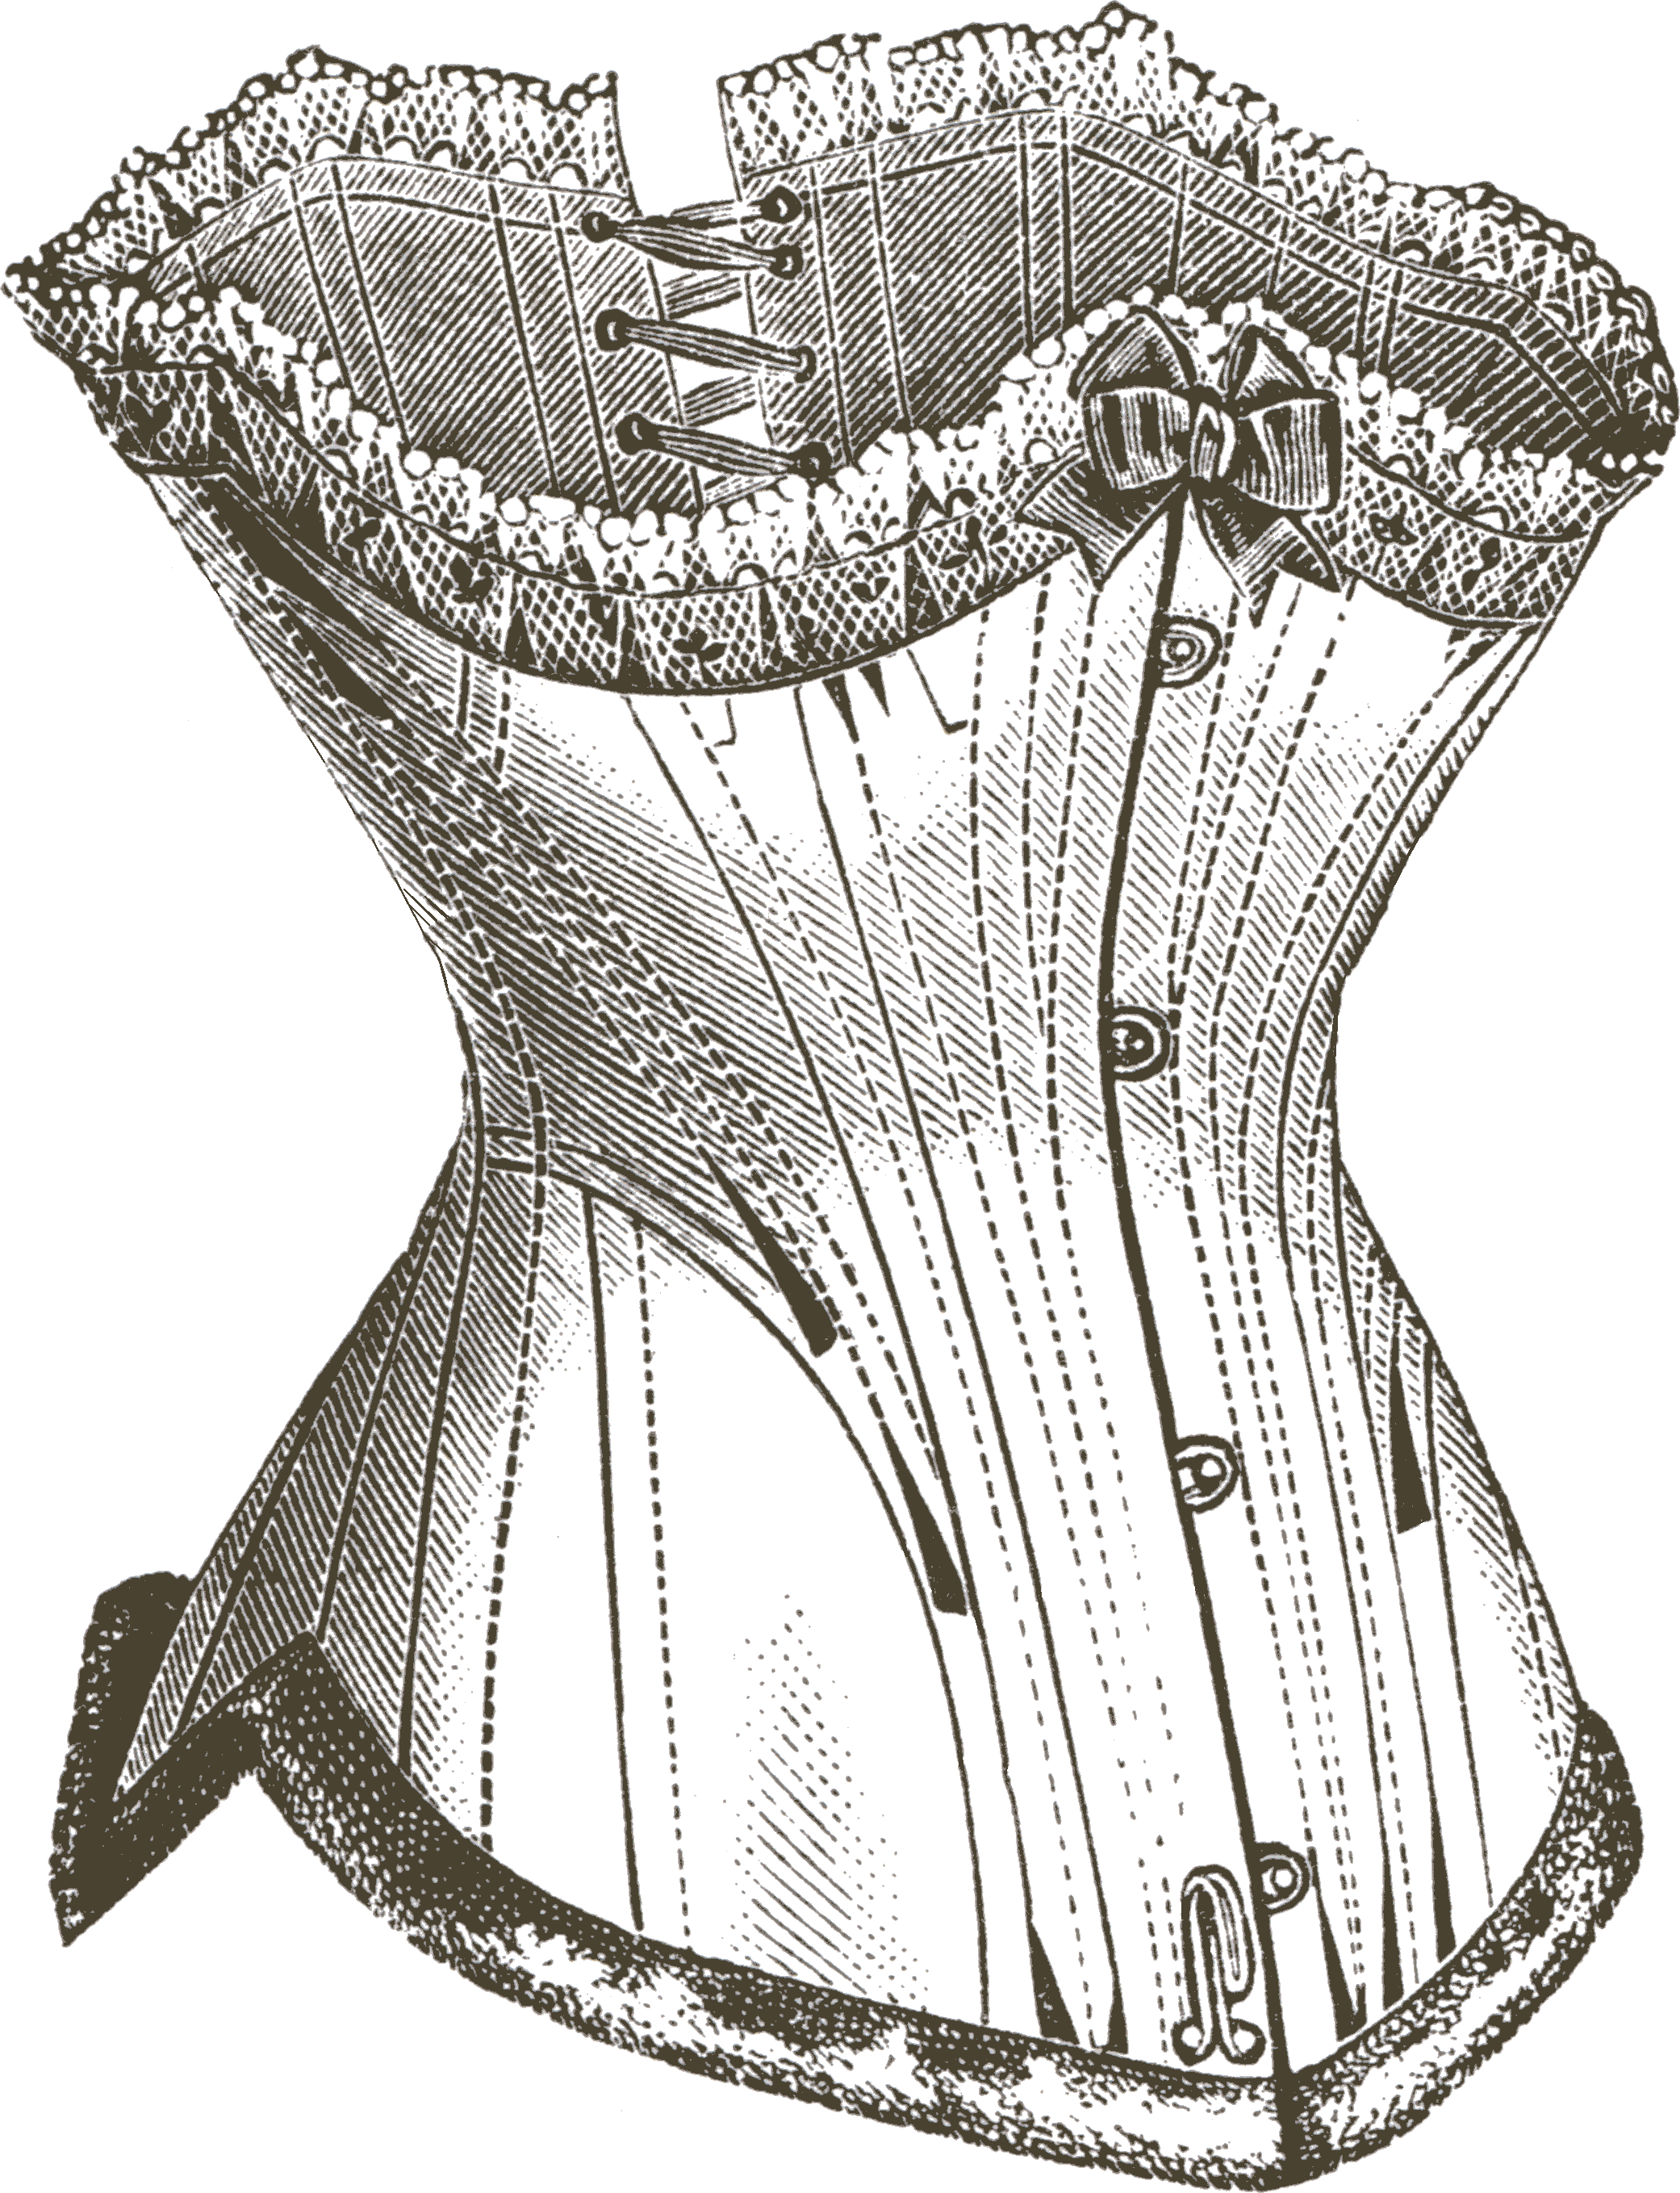 Women's Undergarments: Corsets, Girdles, Brassieres, Oh My